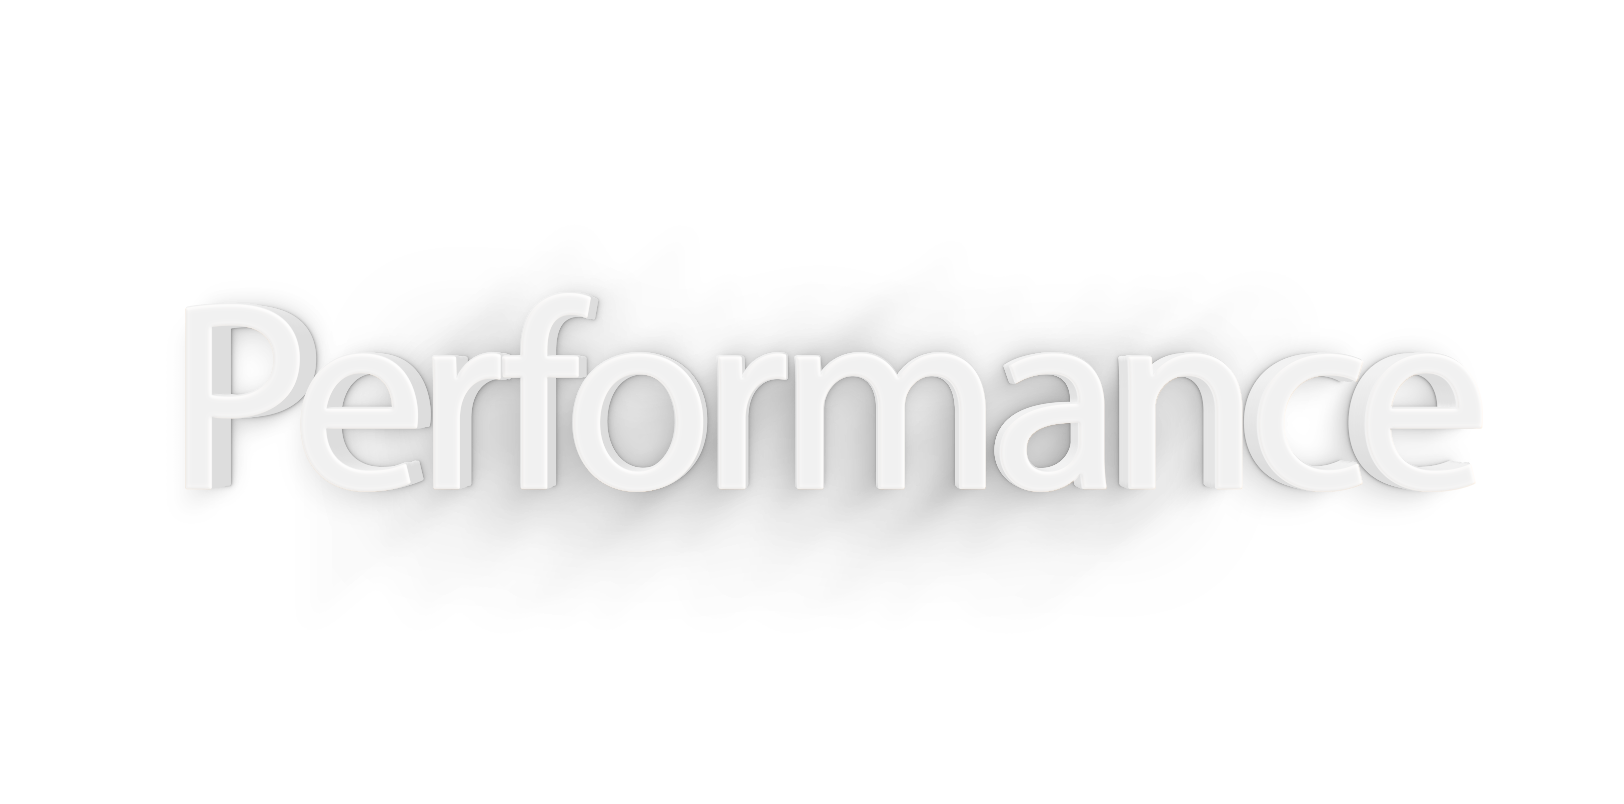 Performance png, word Performance png, Performance word png, Performance text png, Performance font png, word Performance text effects typography PNG transparent images